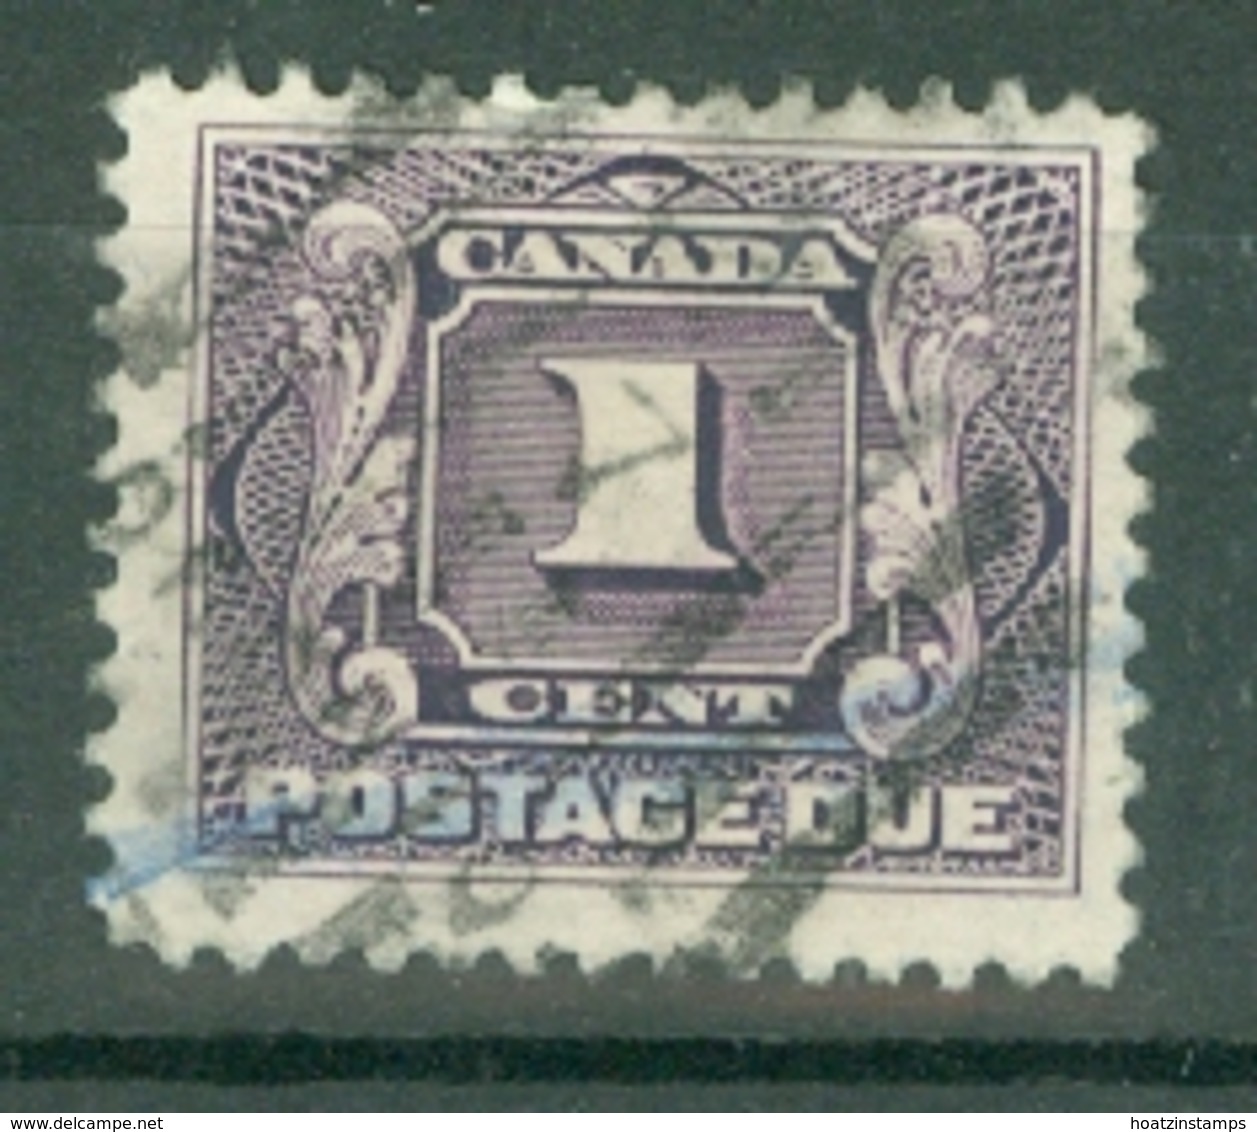 Canada: 1906/28   Postage Due    SG D1    1c   Dull Violet      Used - Portomarken